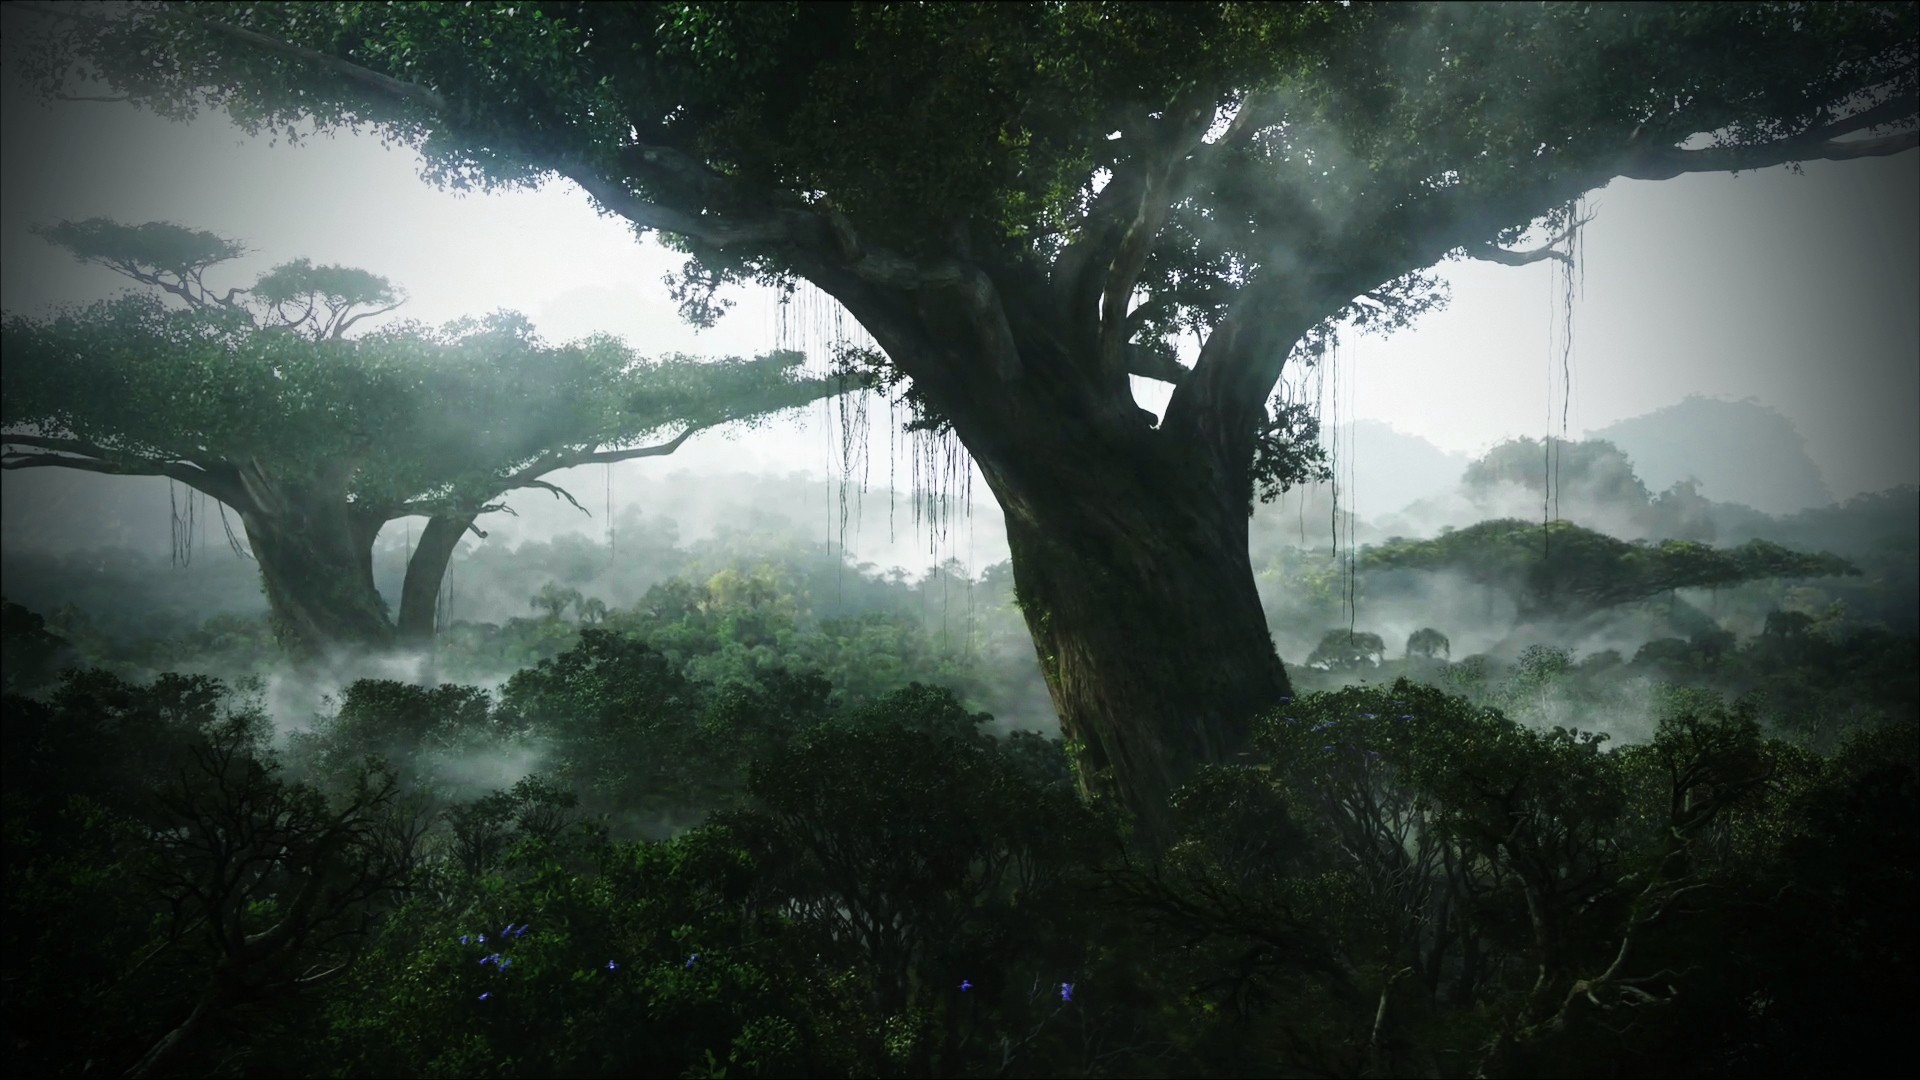 fond d'écran jungle,la nature,arbre,paysage naturel,brouillard,jungle